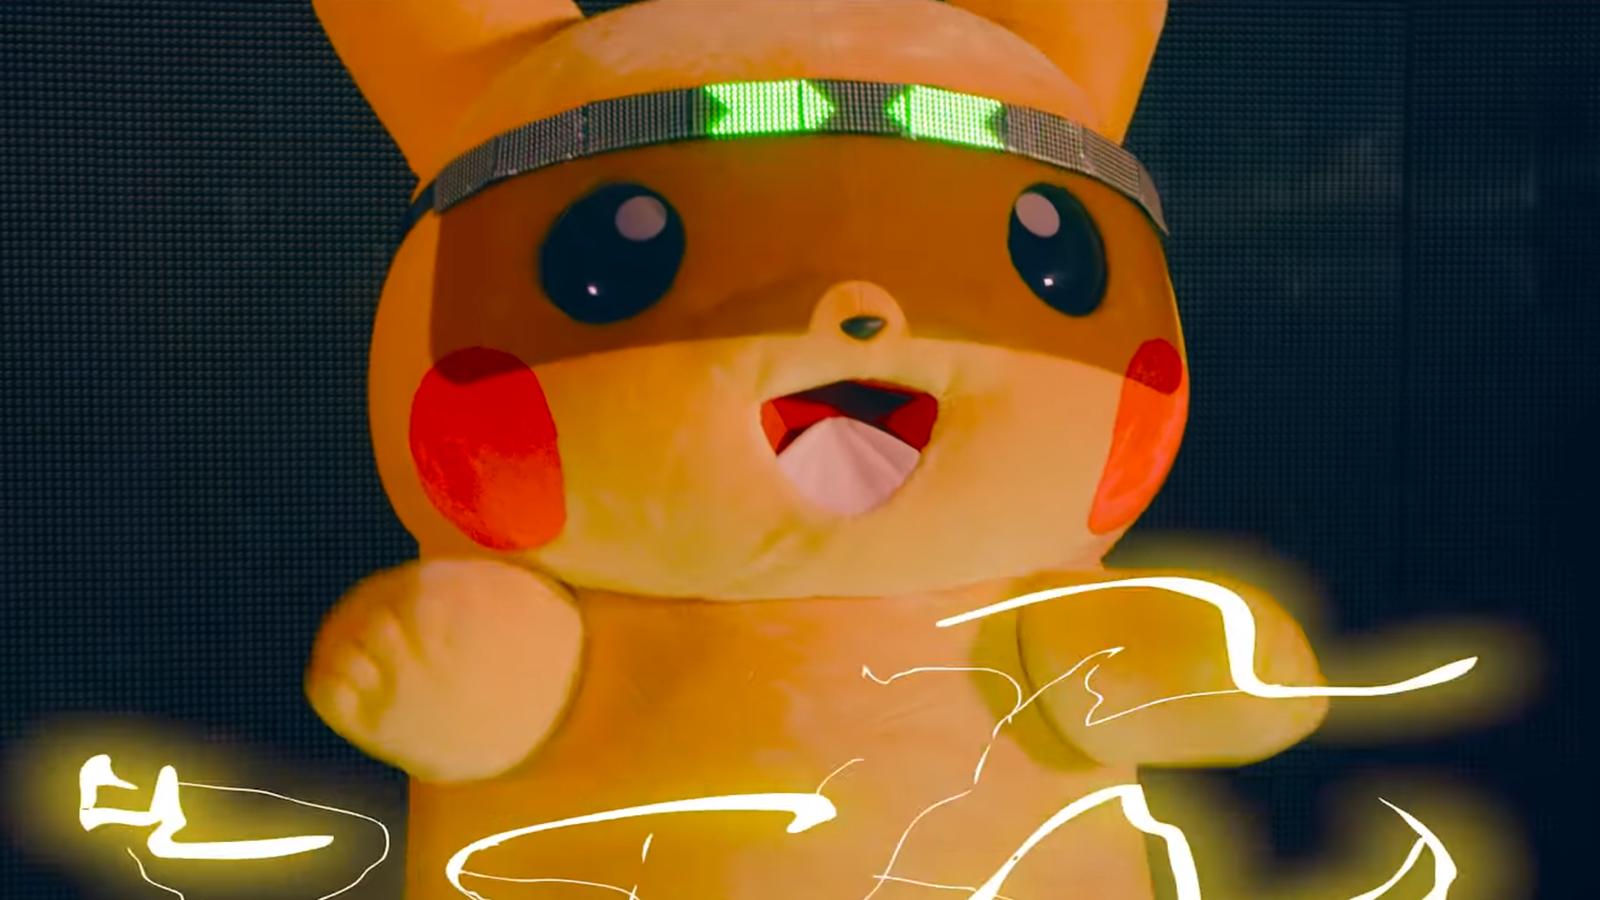 "DJ Pikachu" drops electric beats in a Pokemon Lighting Remix.